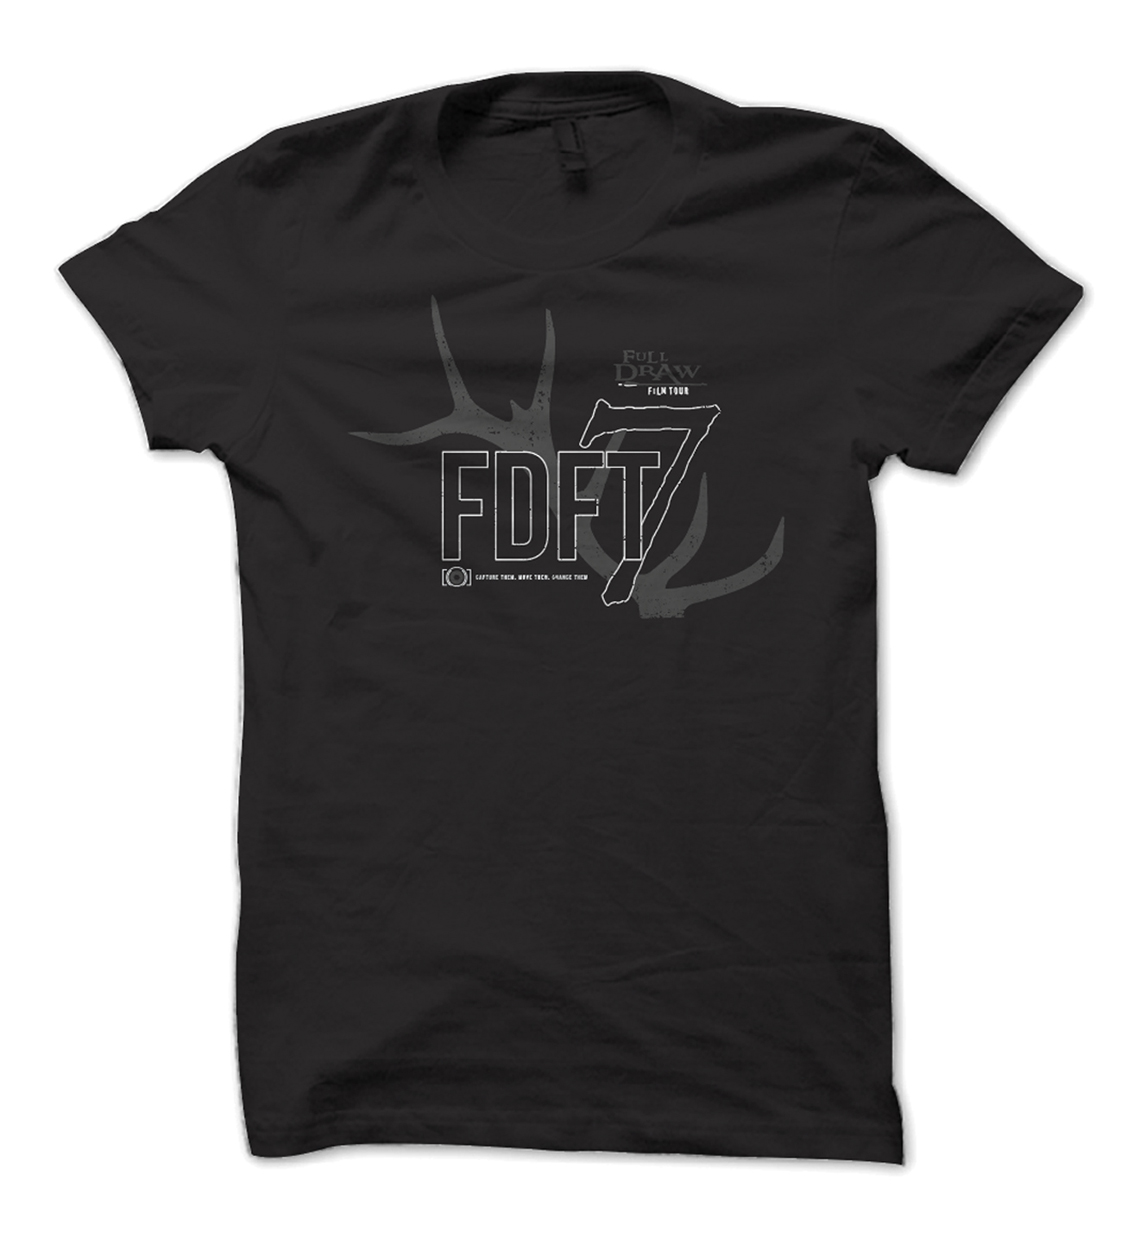 FDFT 7 Film Tour Shirt Design